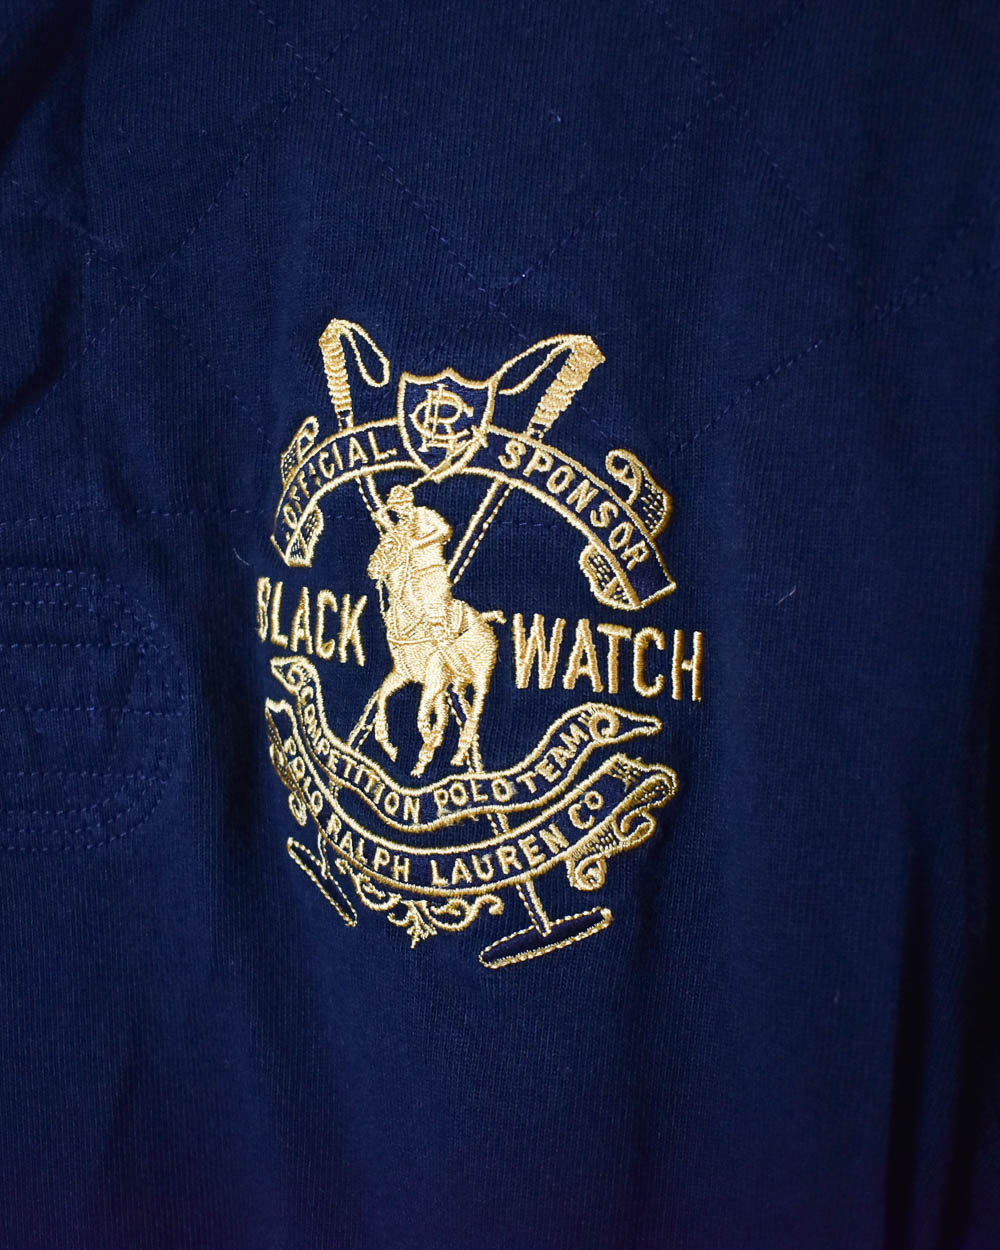 Black Polo Ralph Lauren Black Watch Rugby Shirt - Medium